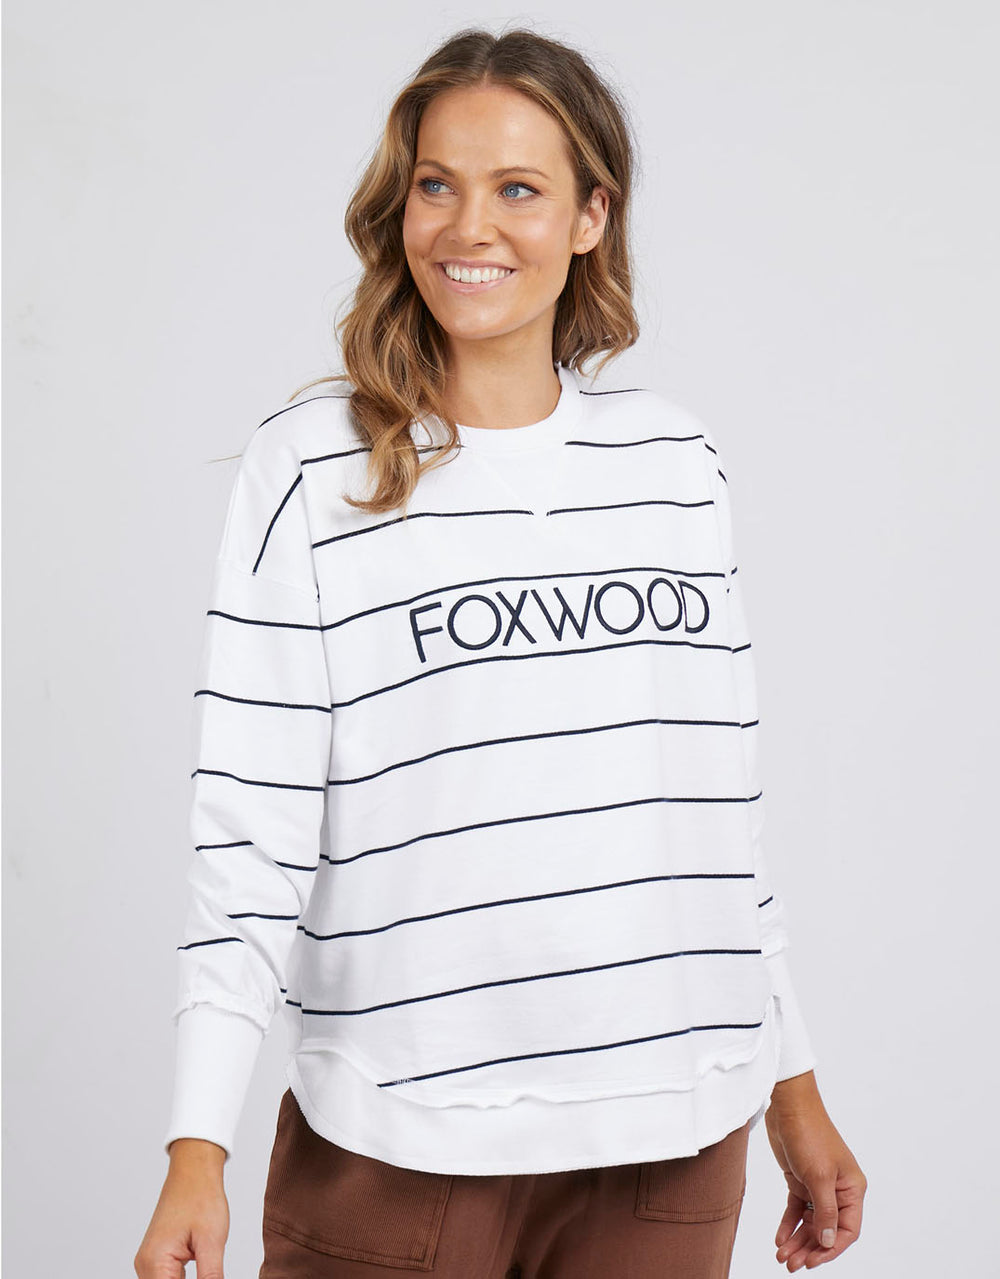 foxwood-simplified-stripe-crew-navy-womens-clothing